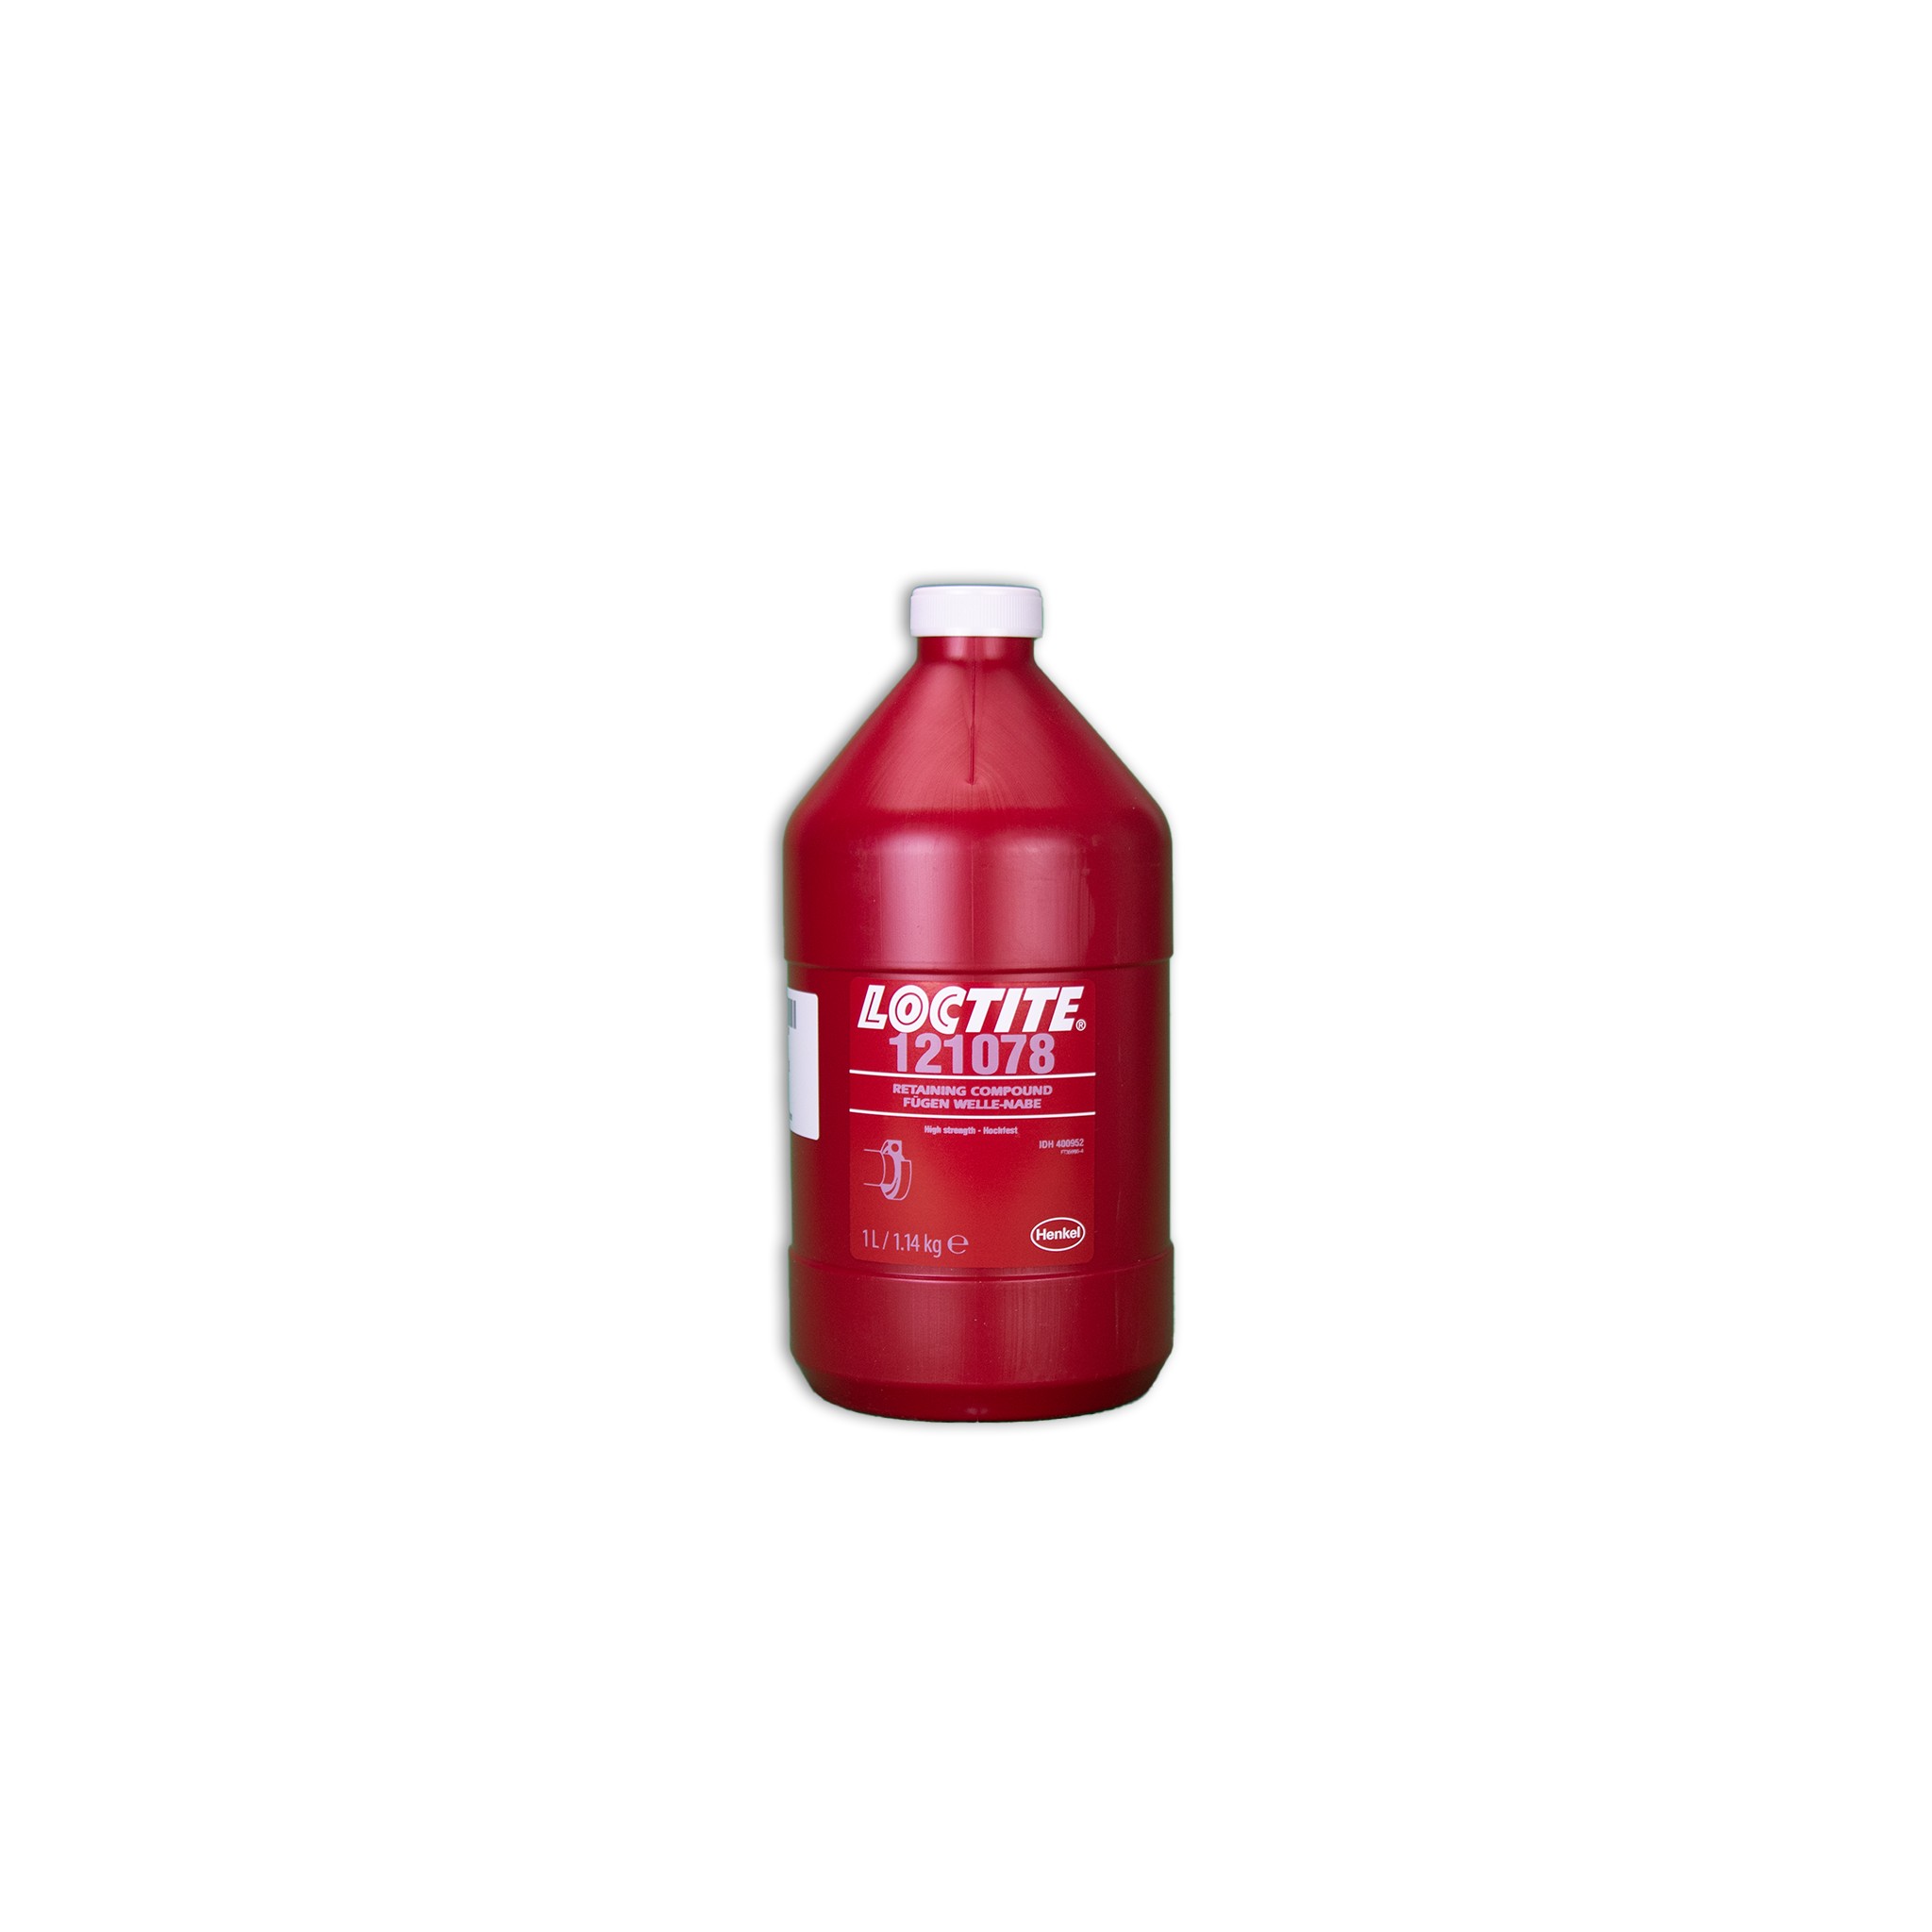 LOCTITE 121078 - 氨基甲酸酯甲基丙烯酸酯固持胶- Henkel Adhesives